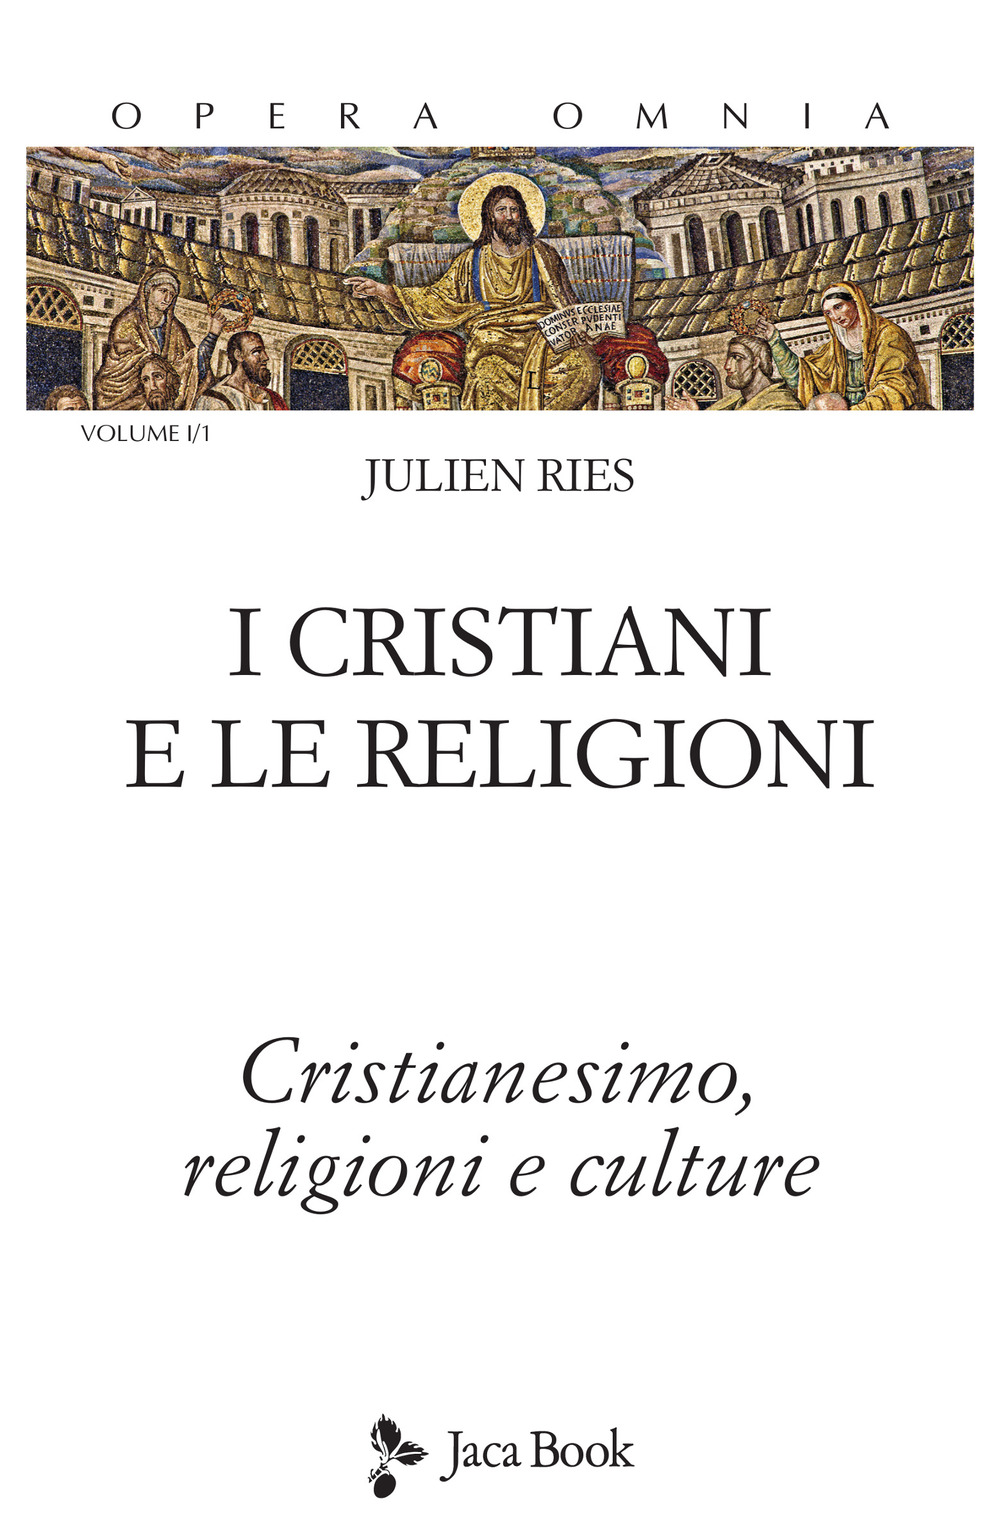 Image of Opera omnia. Vol. 11: I cristiani e le religioni. Cristianesimo, religioni e culture.